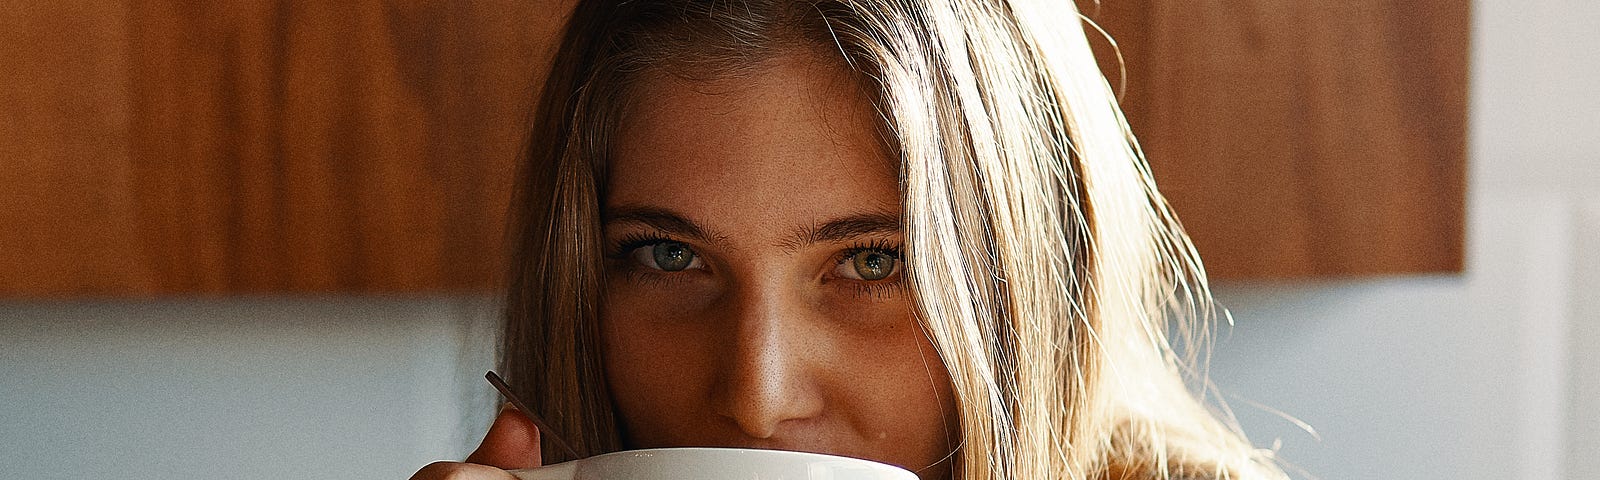 A girl dirinking coffee